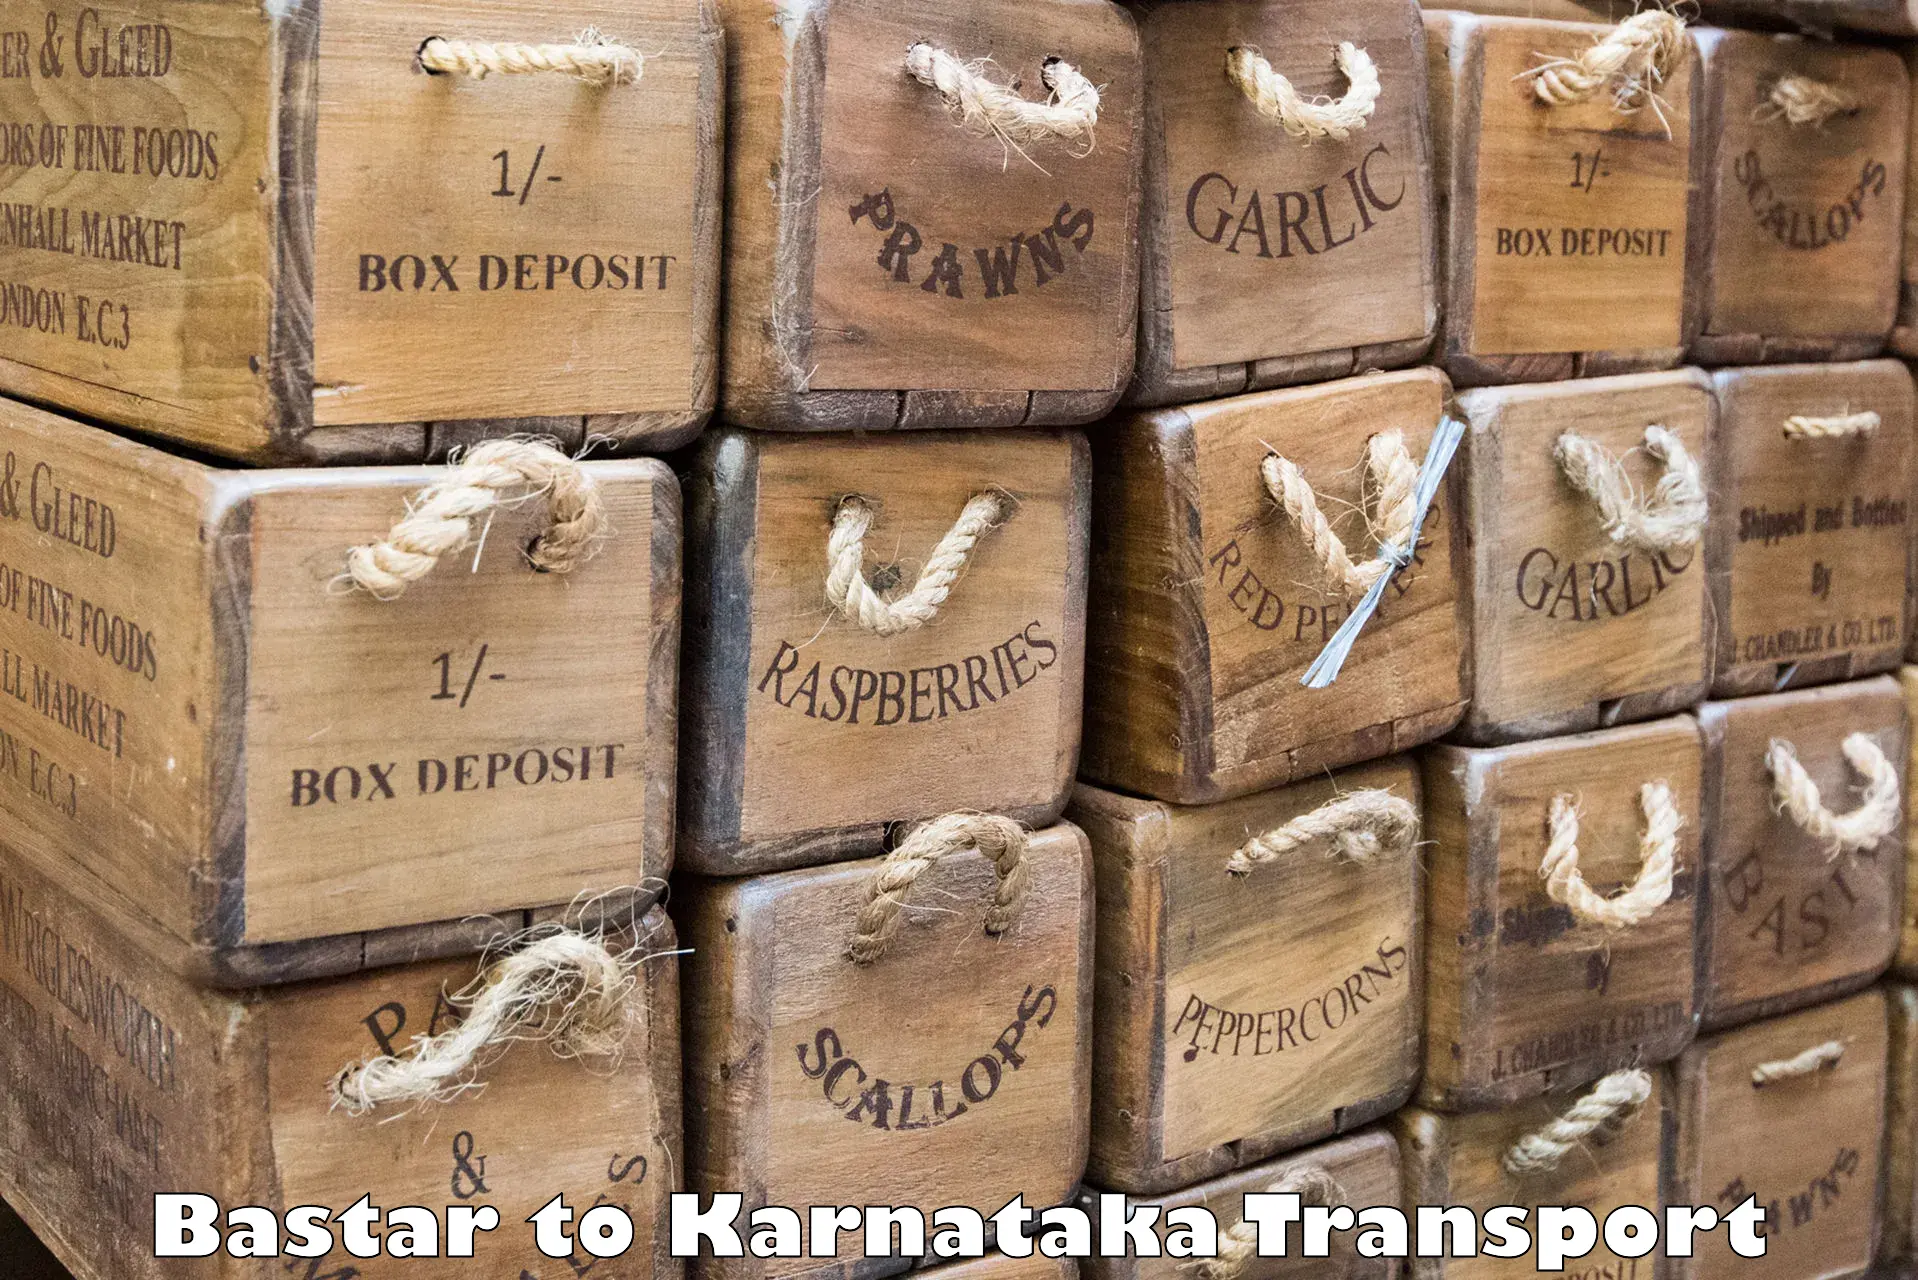 Transport shared services Bastar to Karnataka